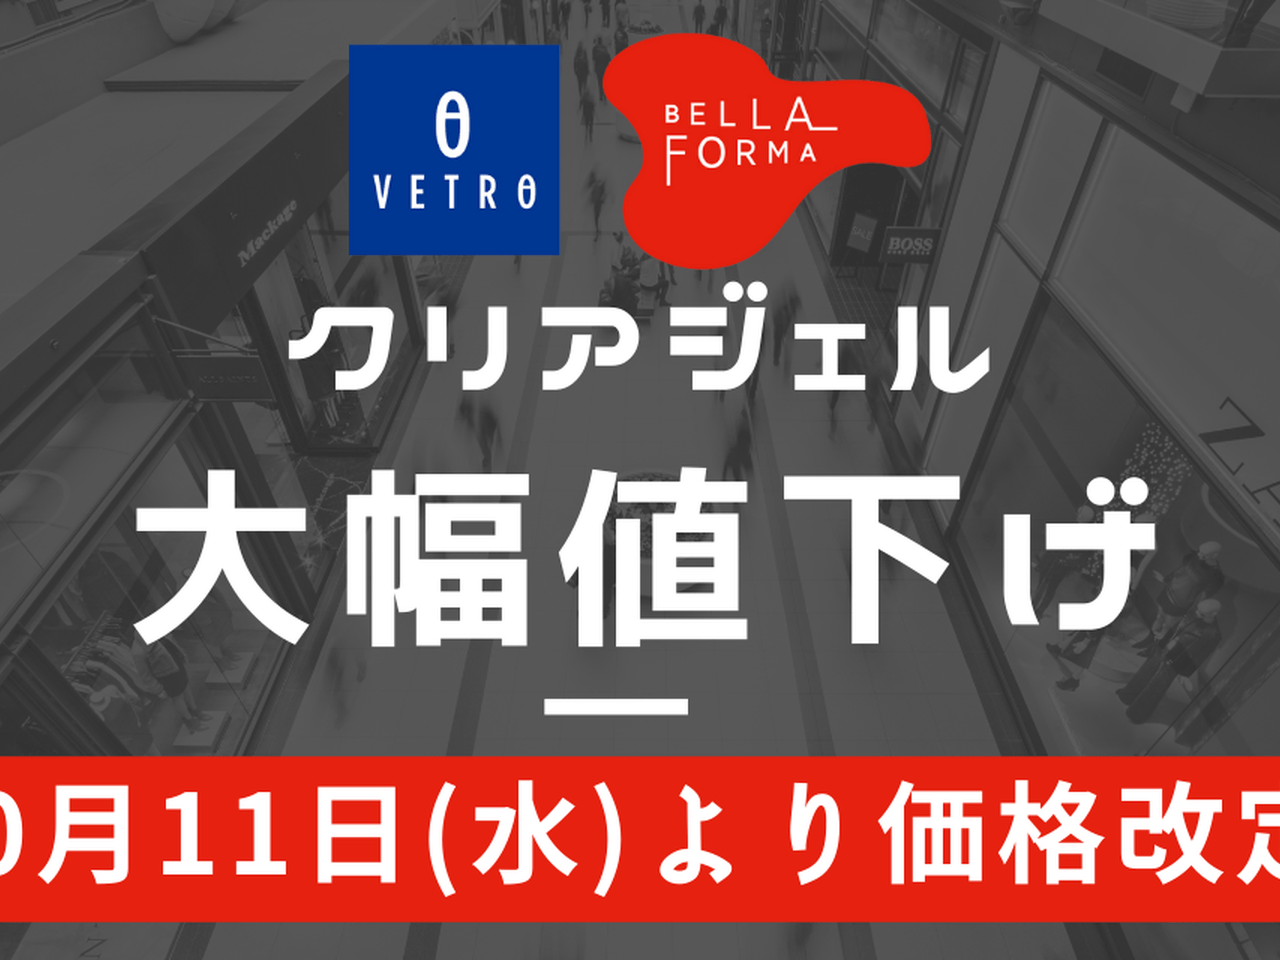 VETRO/BellaFormaのクリアジェル大幅値下げのお知らせ【10/11〜】